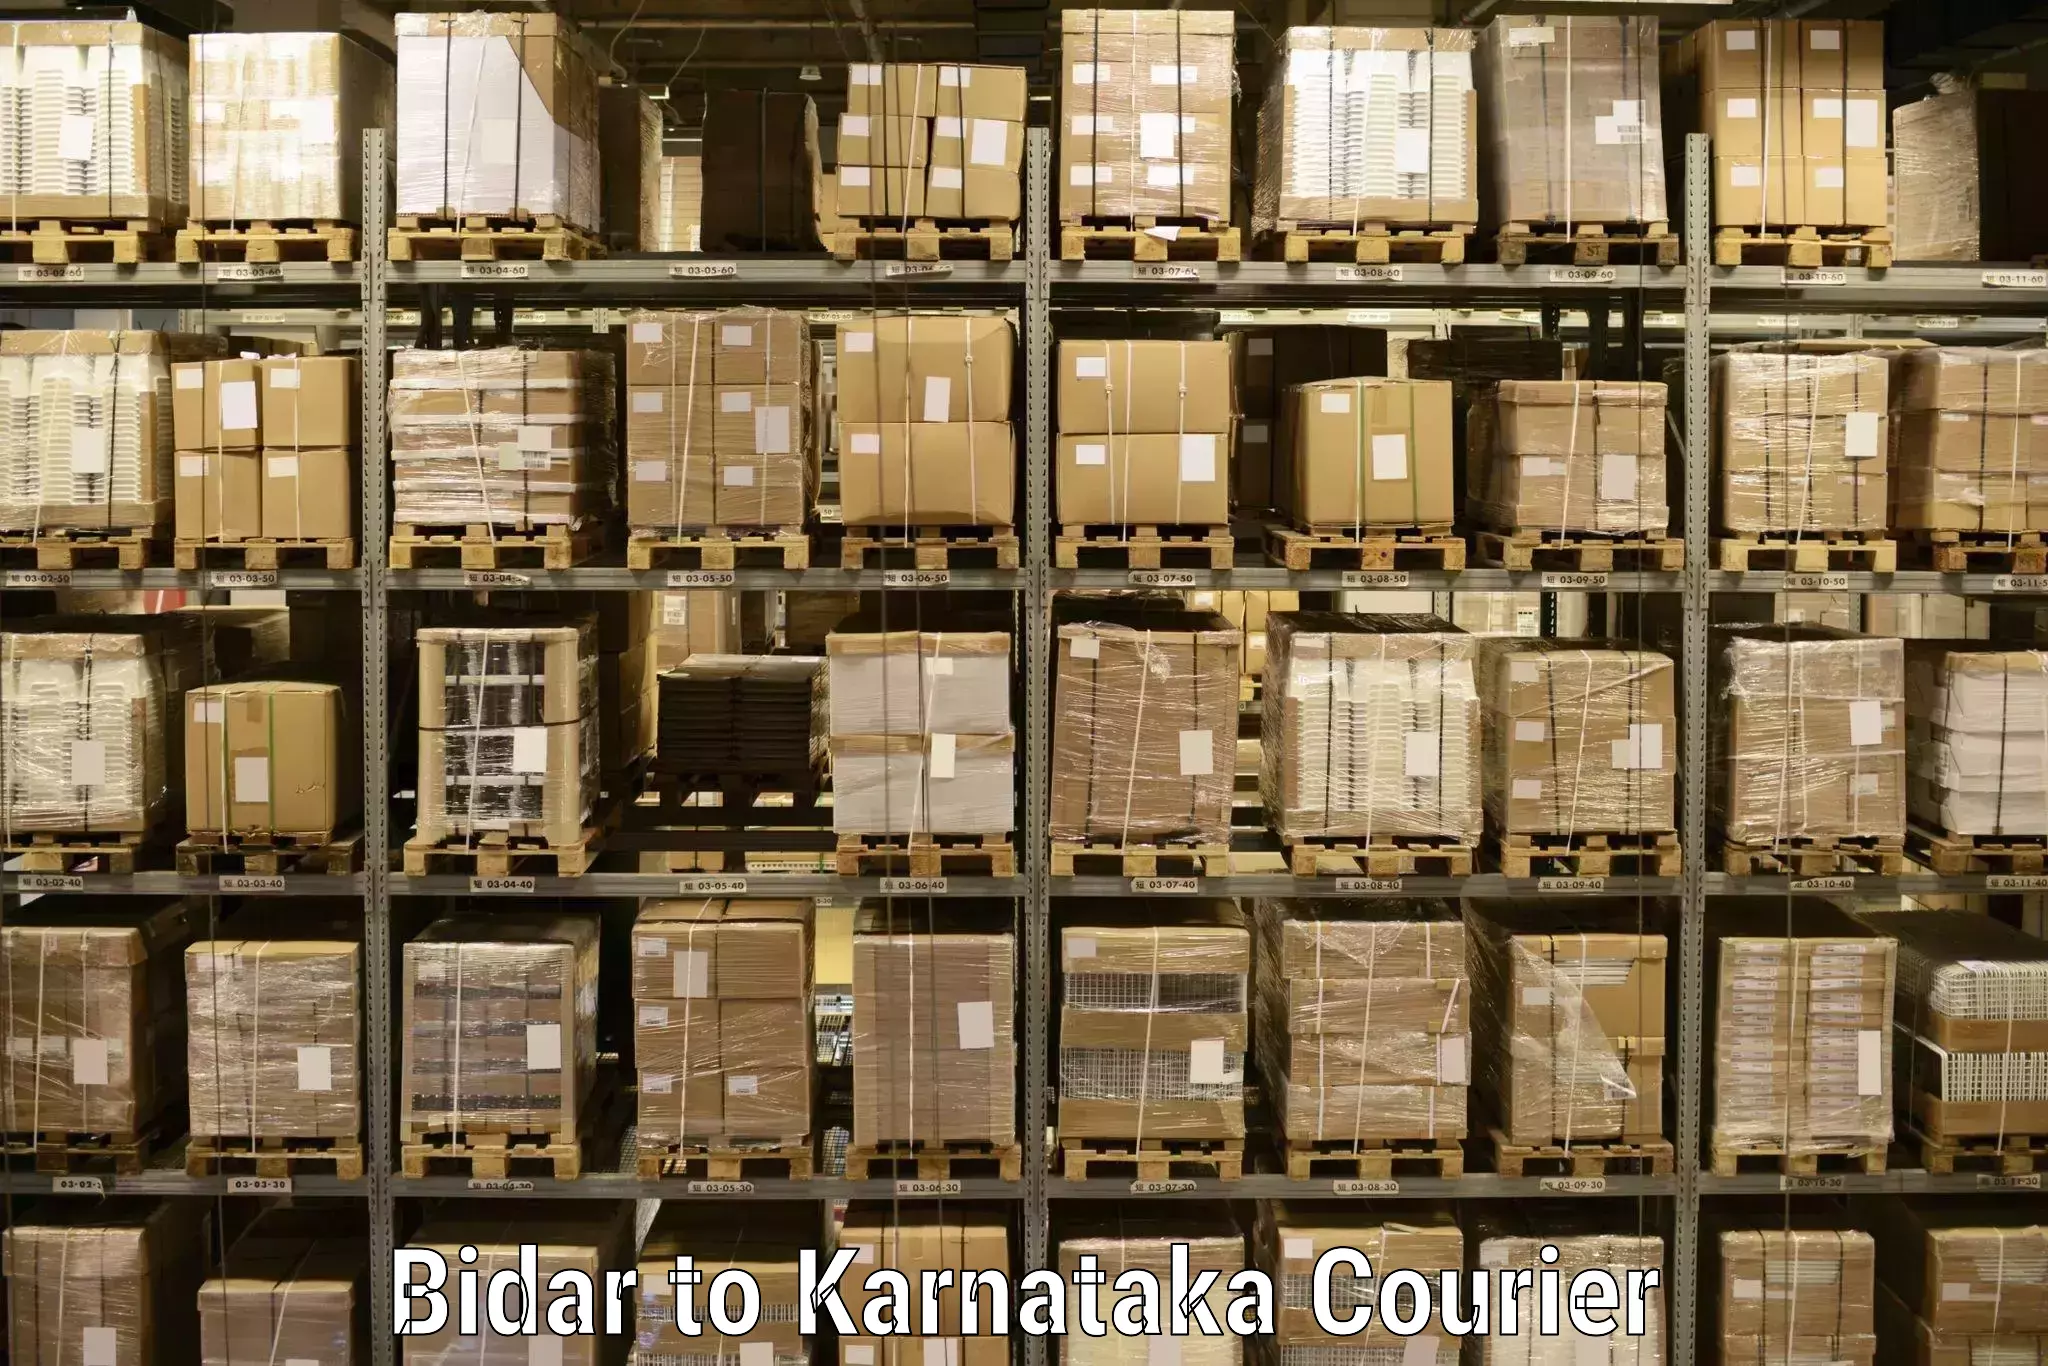 Courier service partnerships Bidar to Bangalore